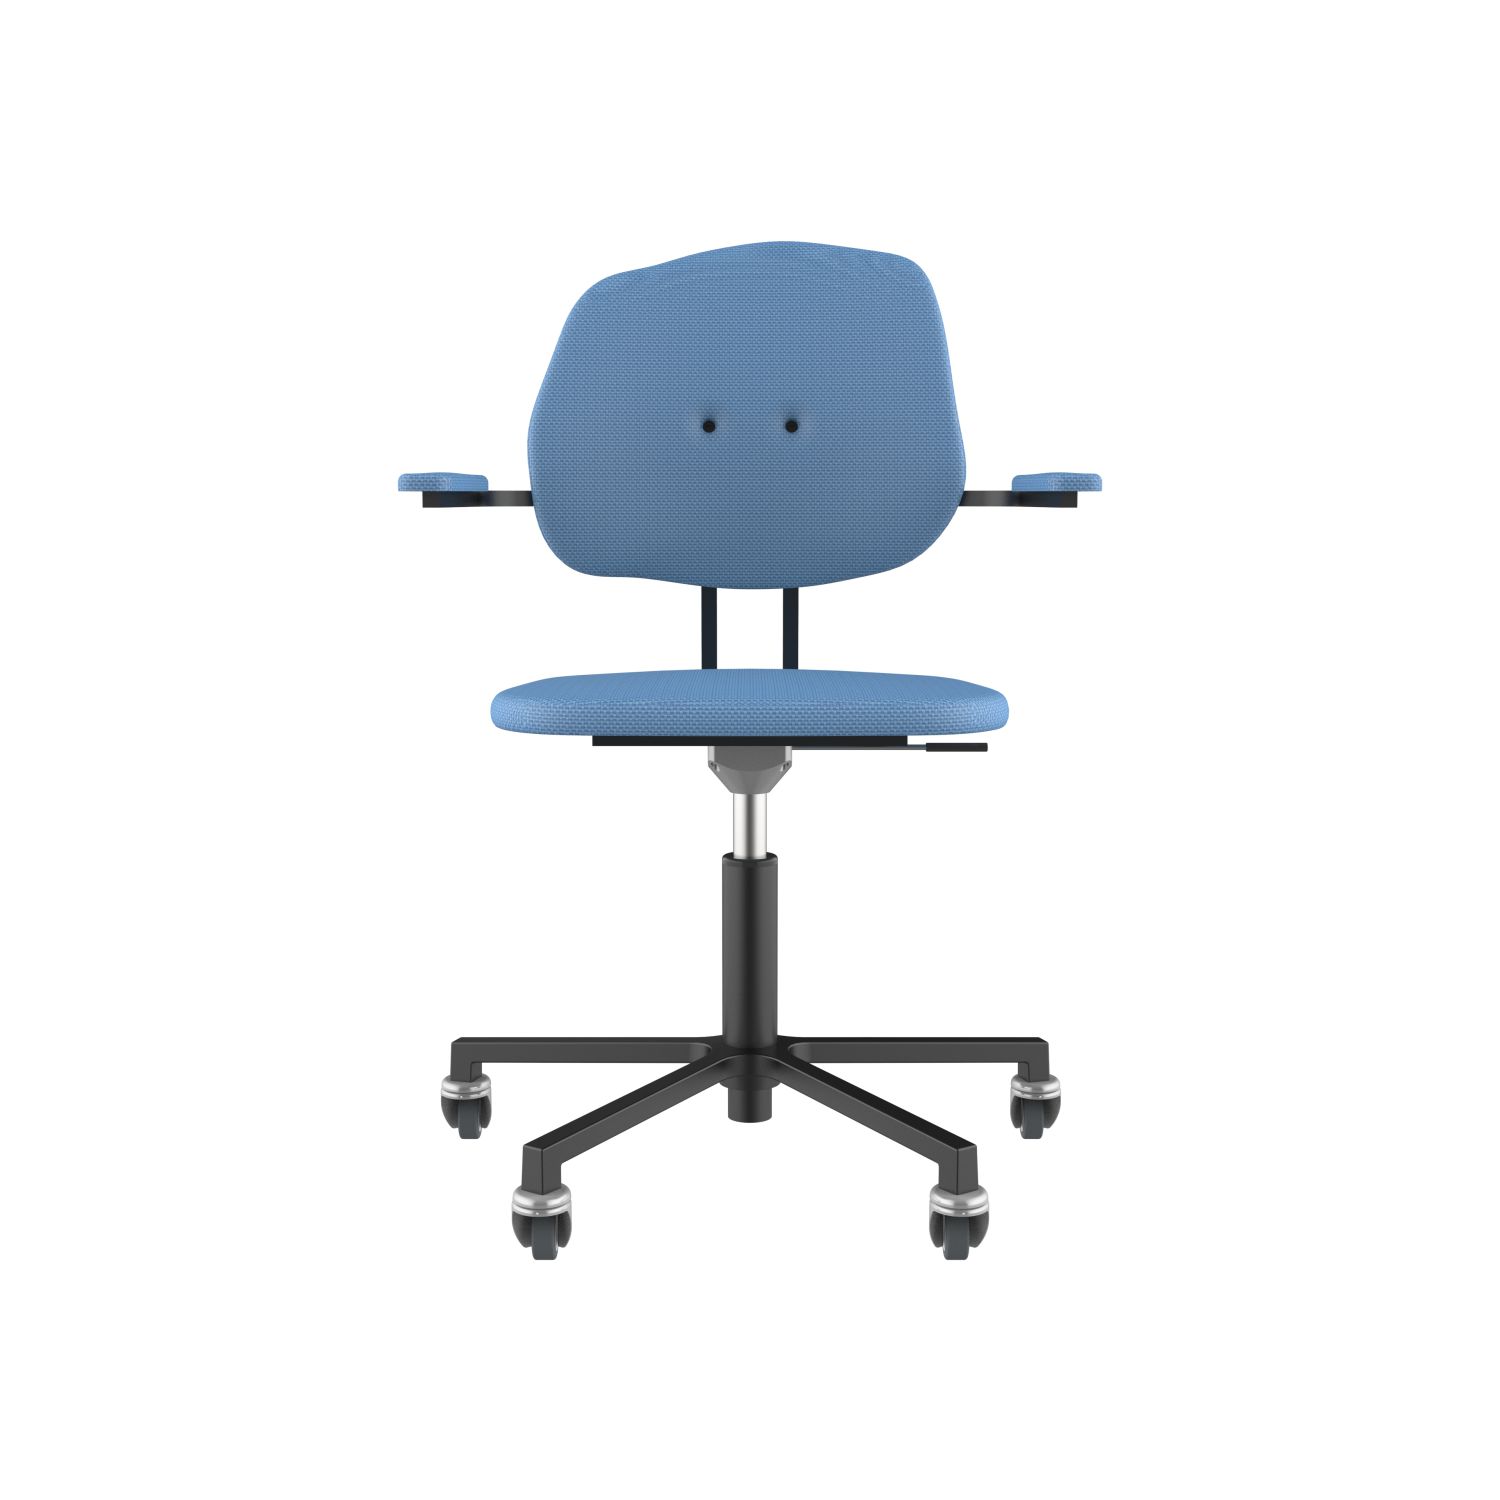 lensvelt maarten baas office chair with armrests backrest g blue horizon 040 black ral9005 soft wheels